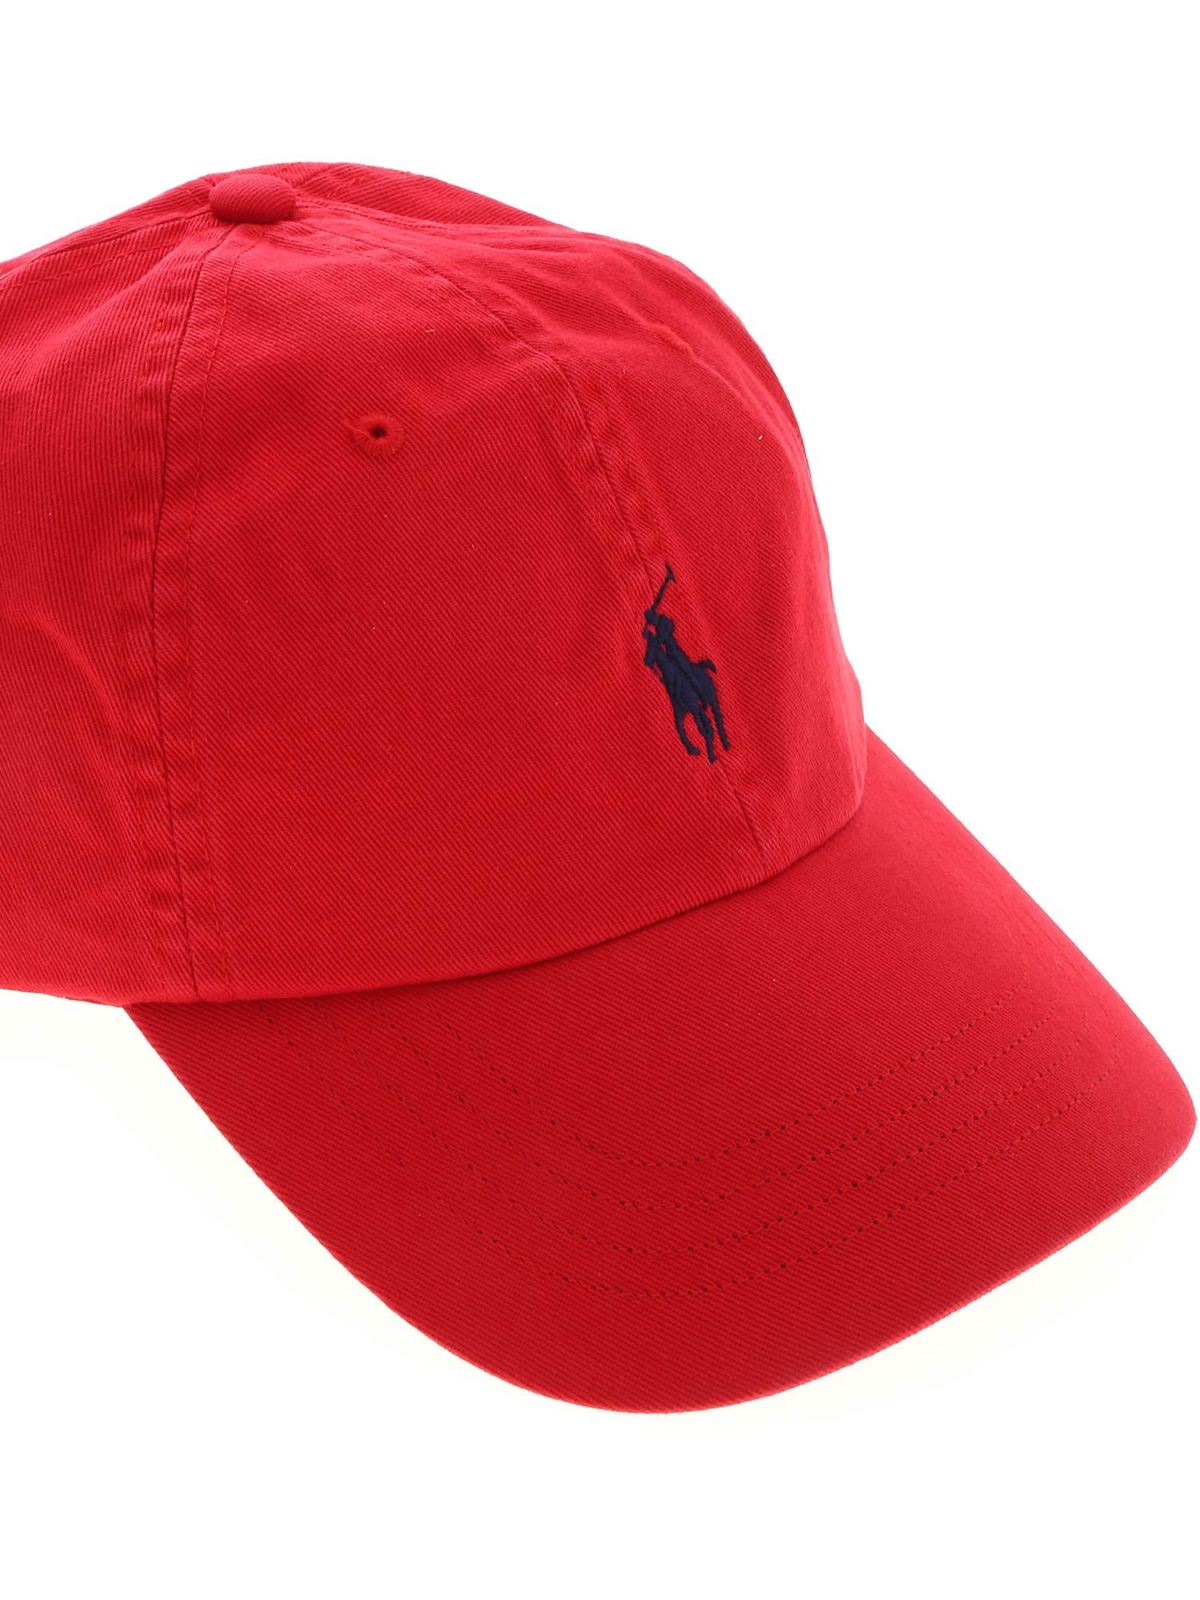 Hats & caps Polo Ralph Lauren - Logo baseball cap in red - 710548524002